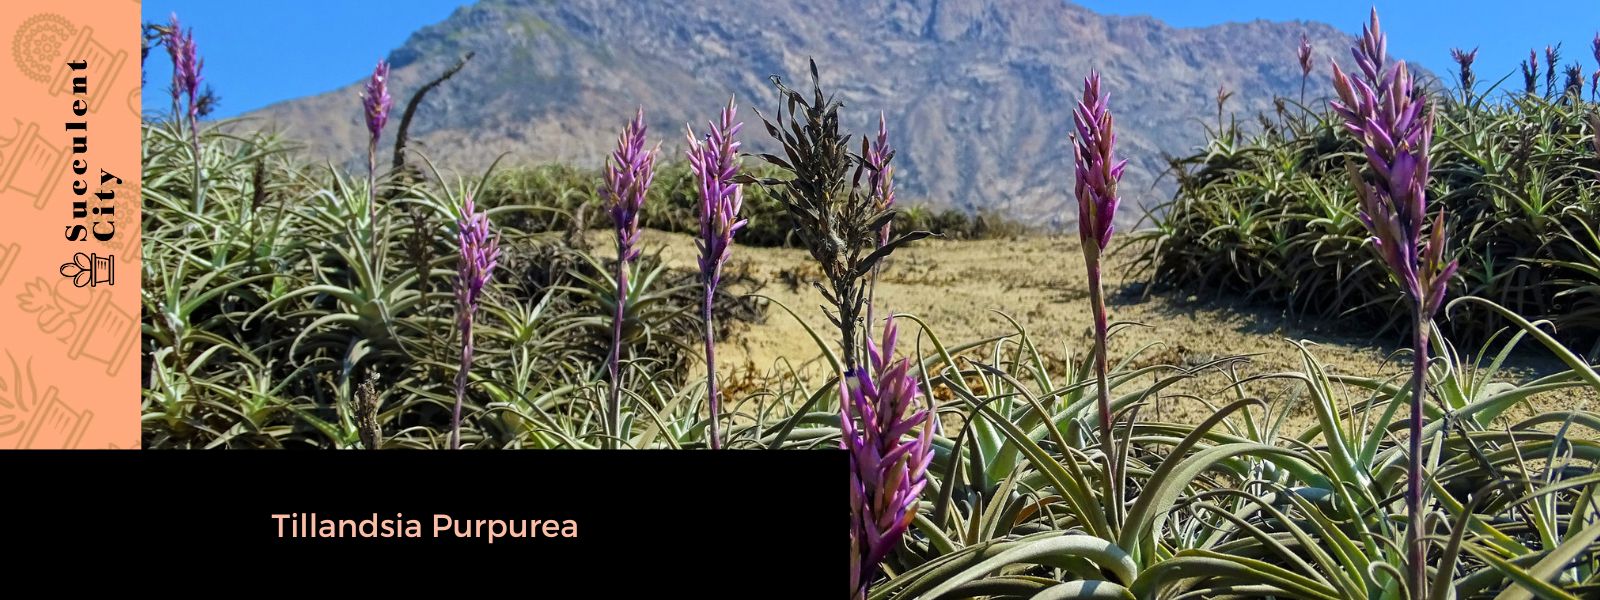 Tillandsia Purpurea (La majestuosa planta de aire púrpura)